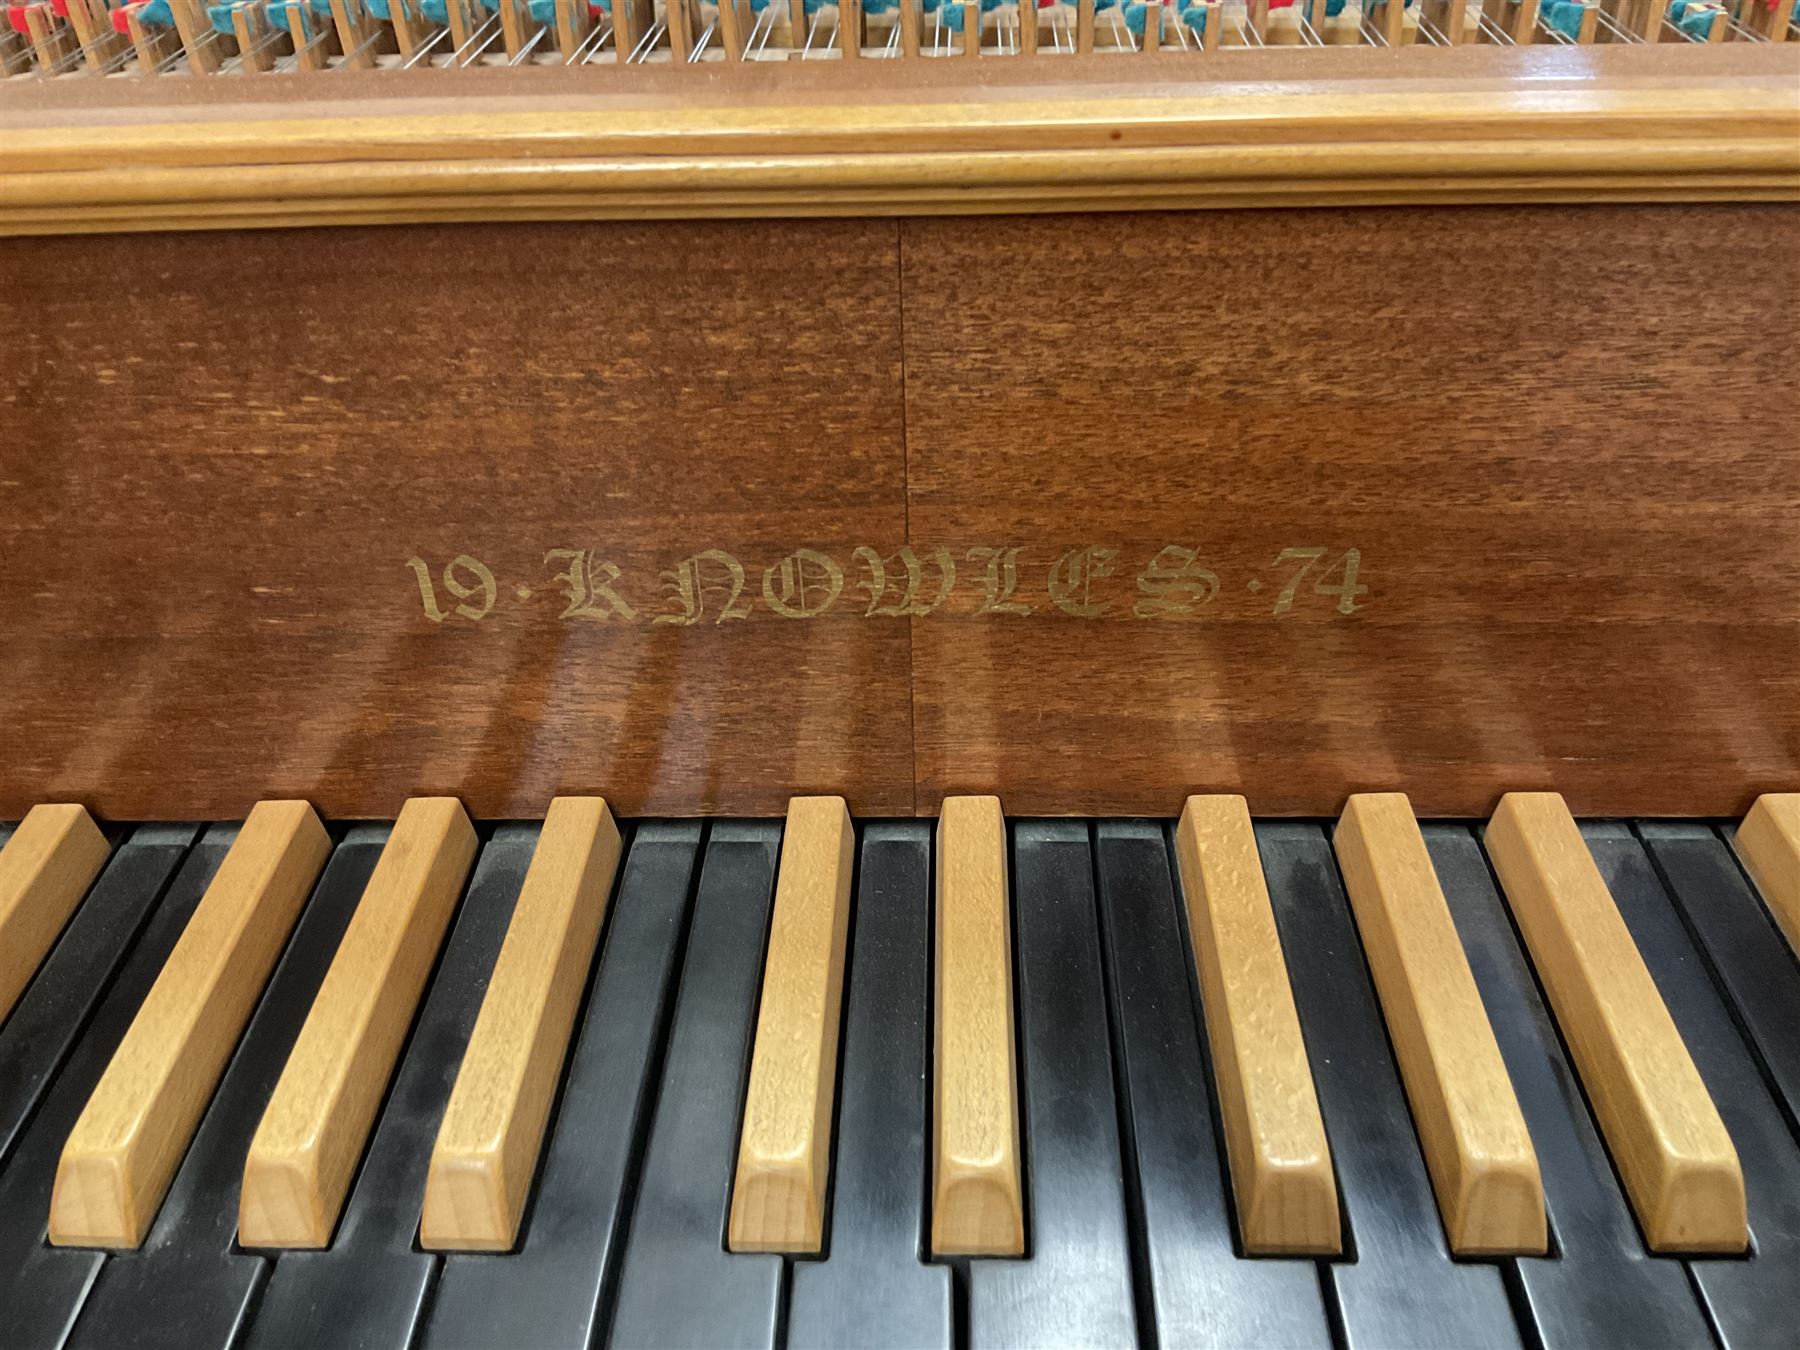 1970s Knowles oak cased harpsichord dated 1974 with 31-key ebonised keyboard - Image 3 of 12